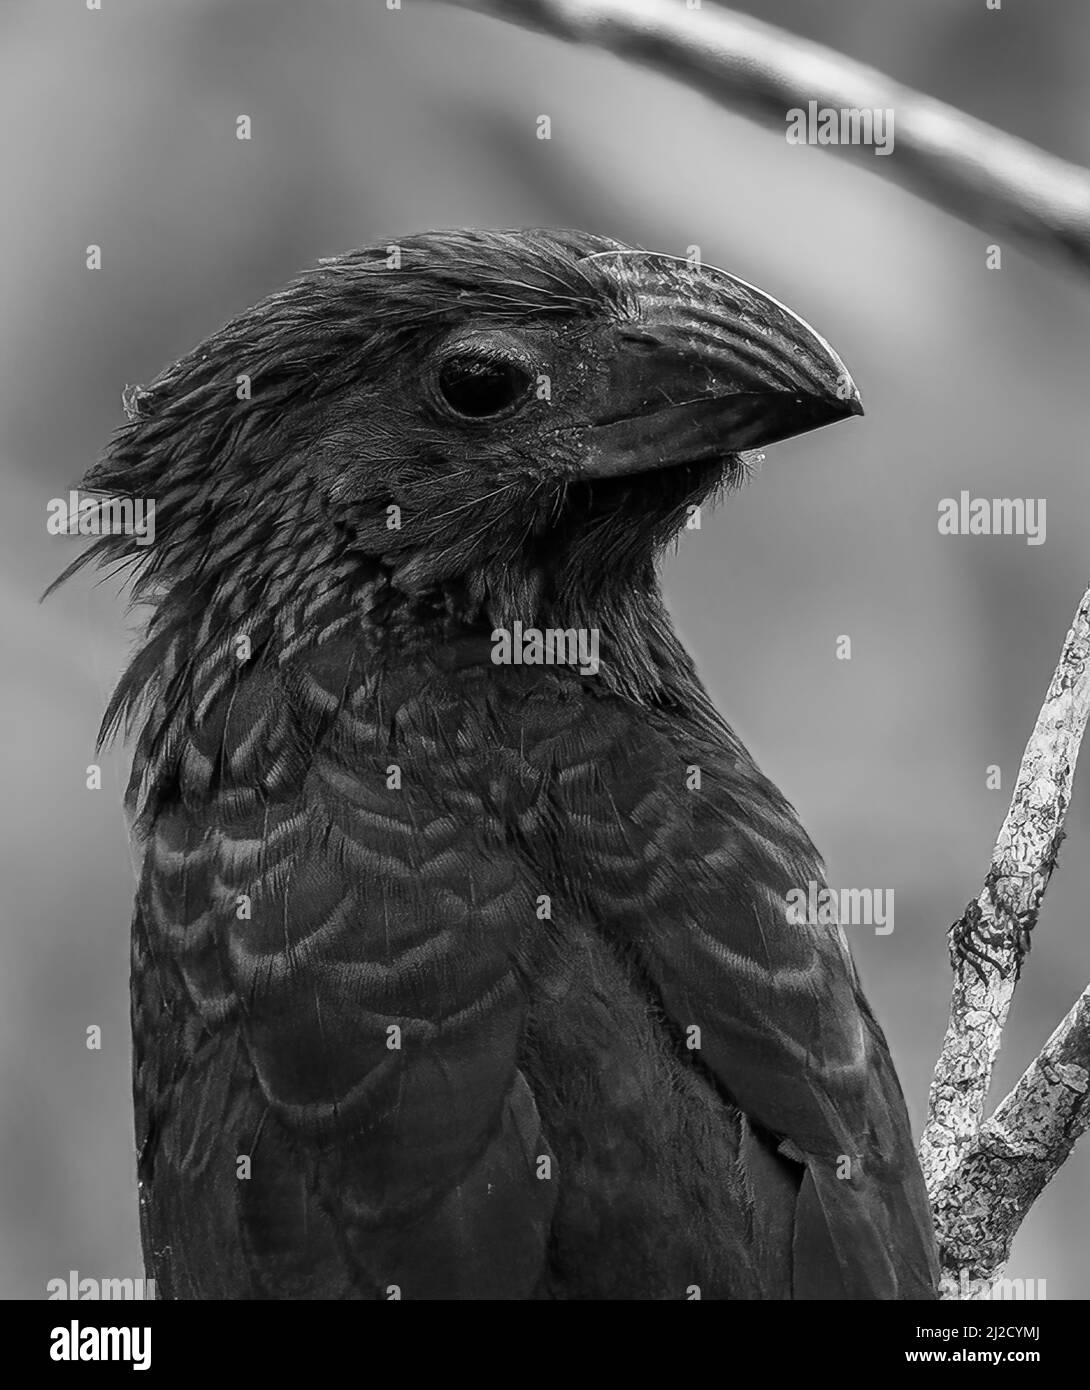 Groove-billed Ani Bird, Crotophaga sulcirostris in Panama, Black and White Image Stock Photo